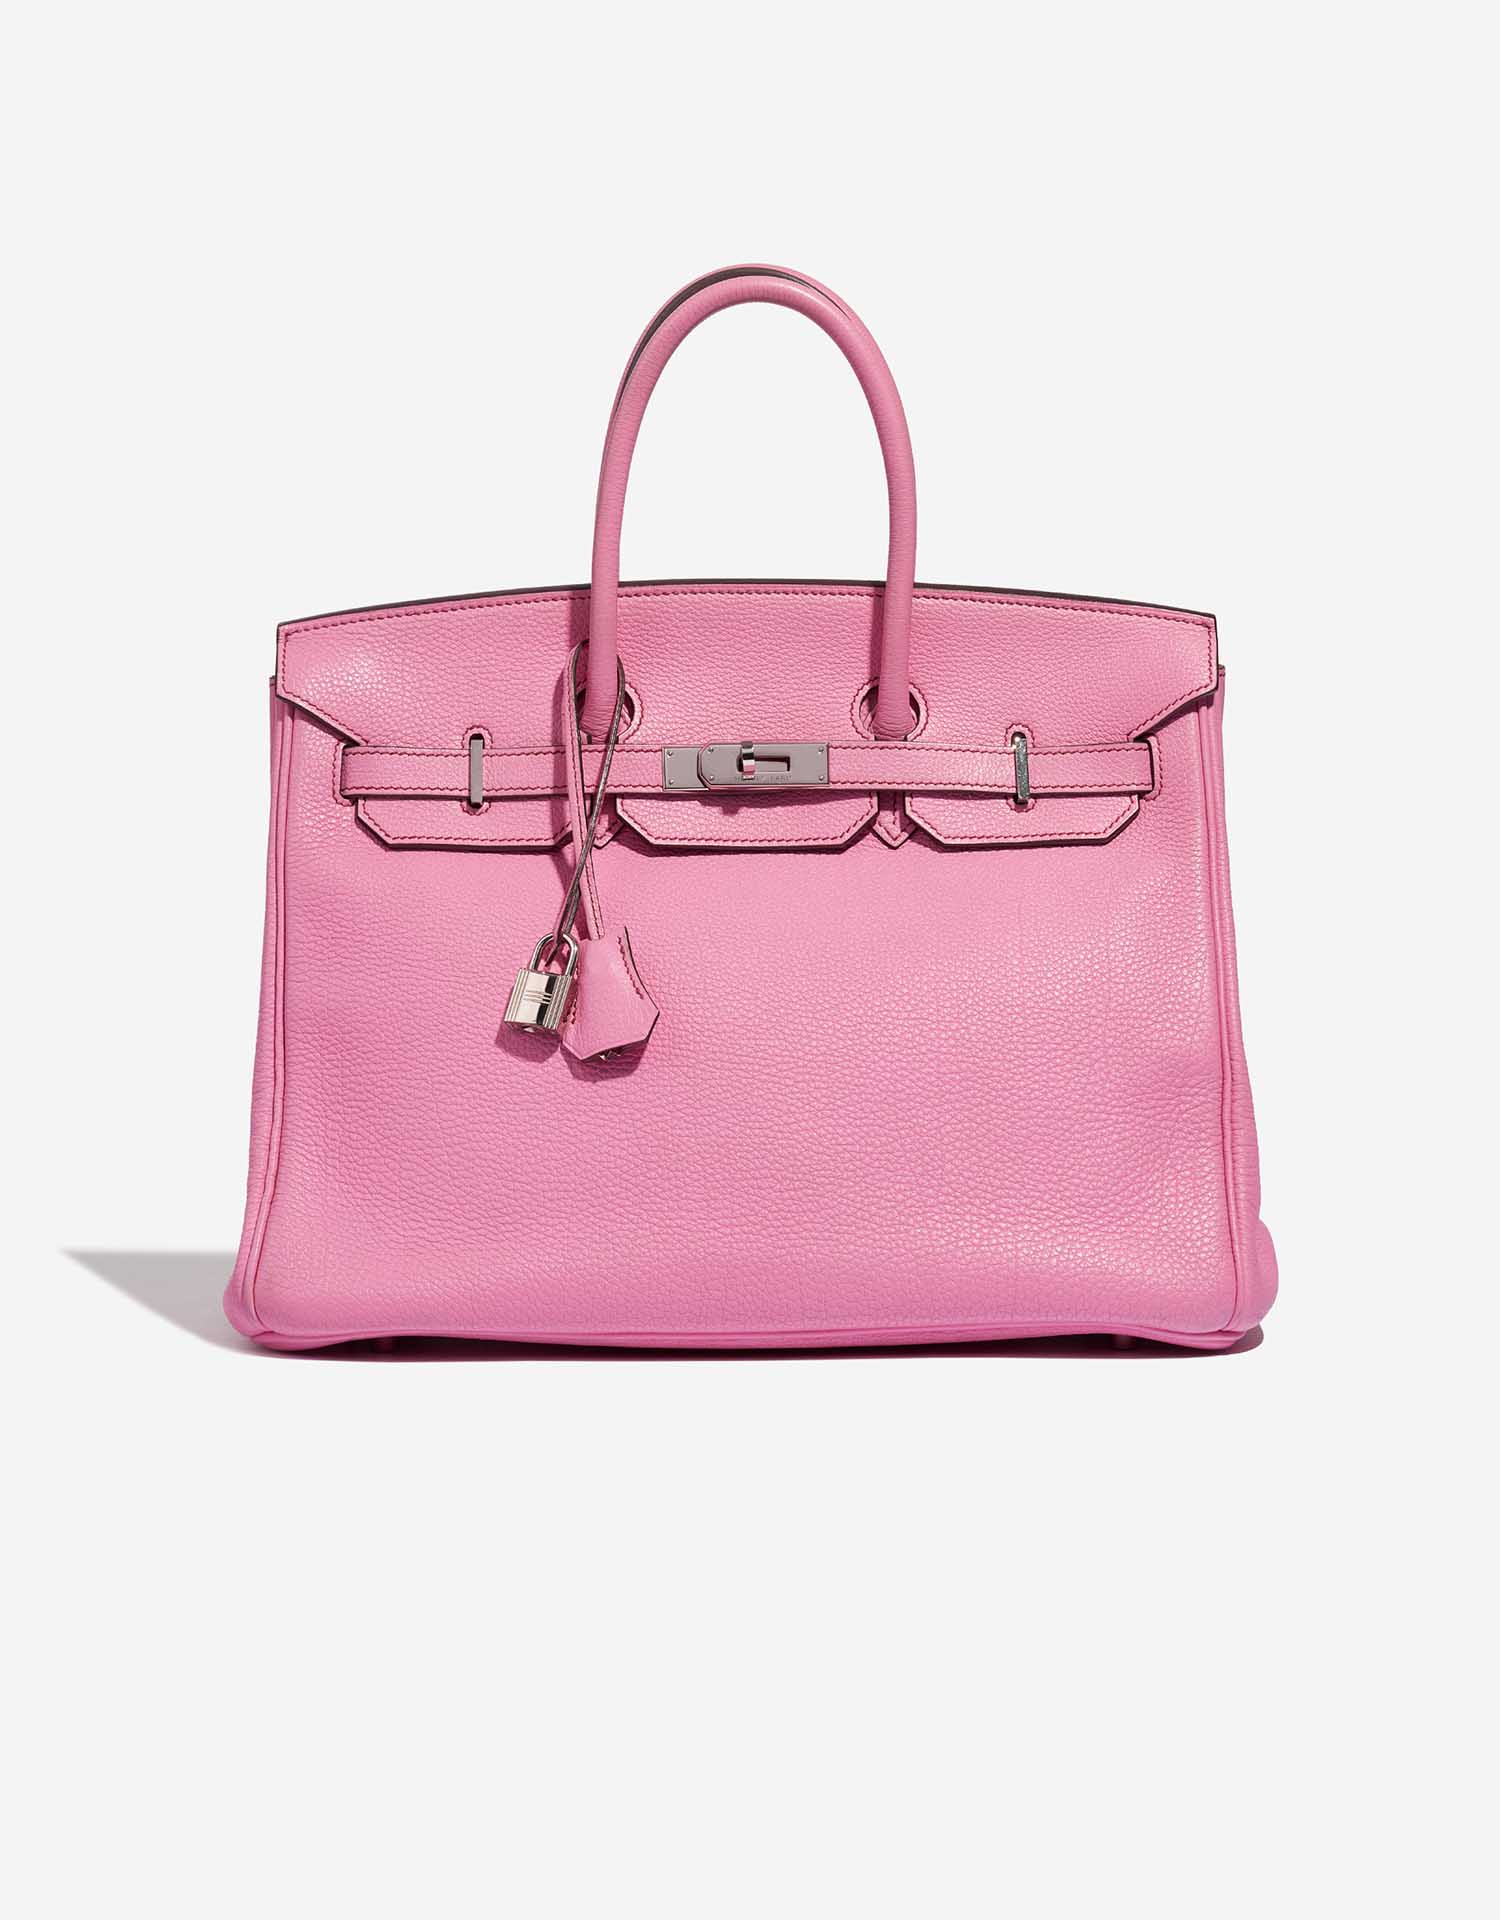 Chrissy Hermes Birkin 35cm bubblegum Pink Bag street style New York. 